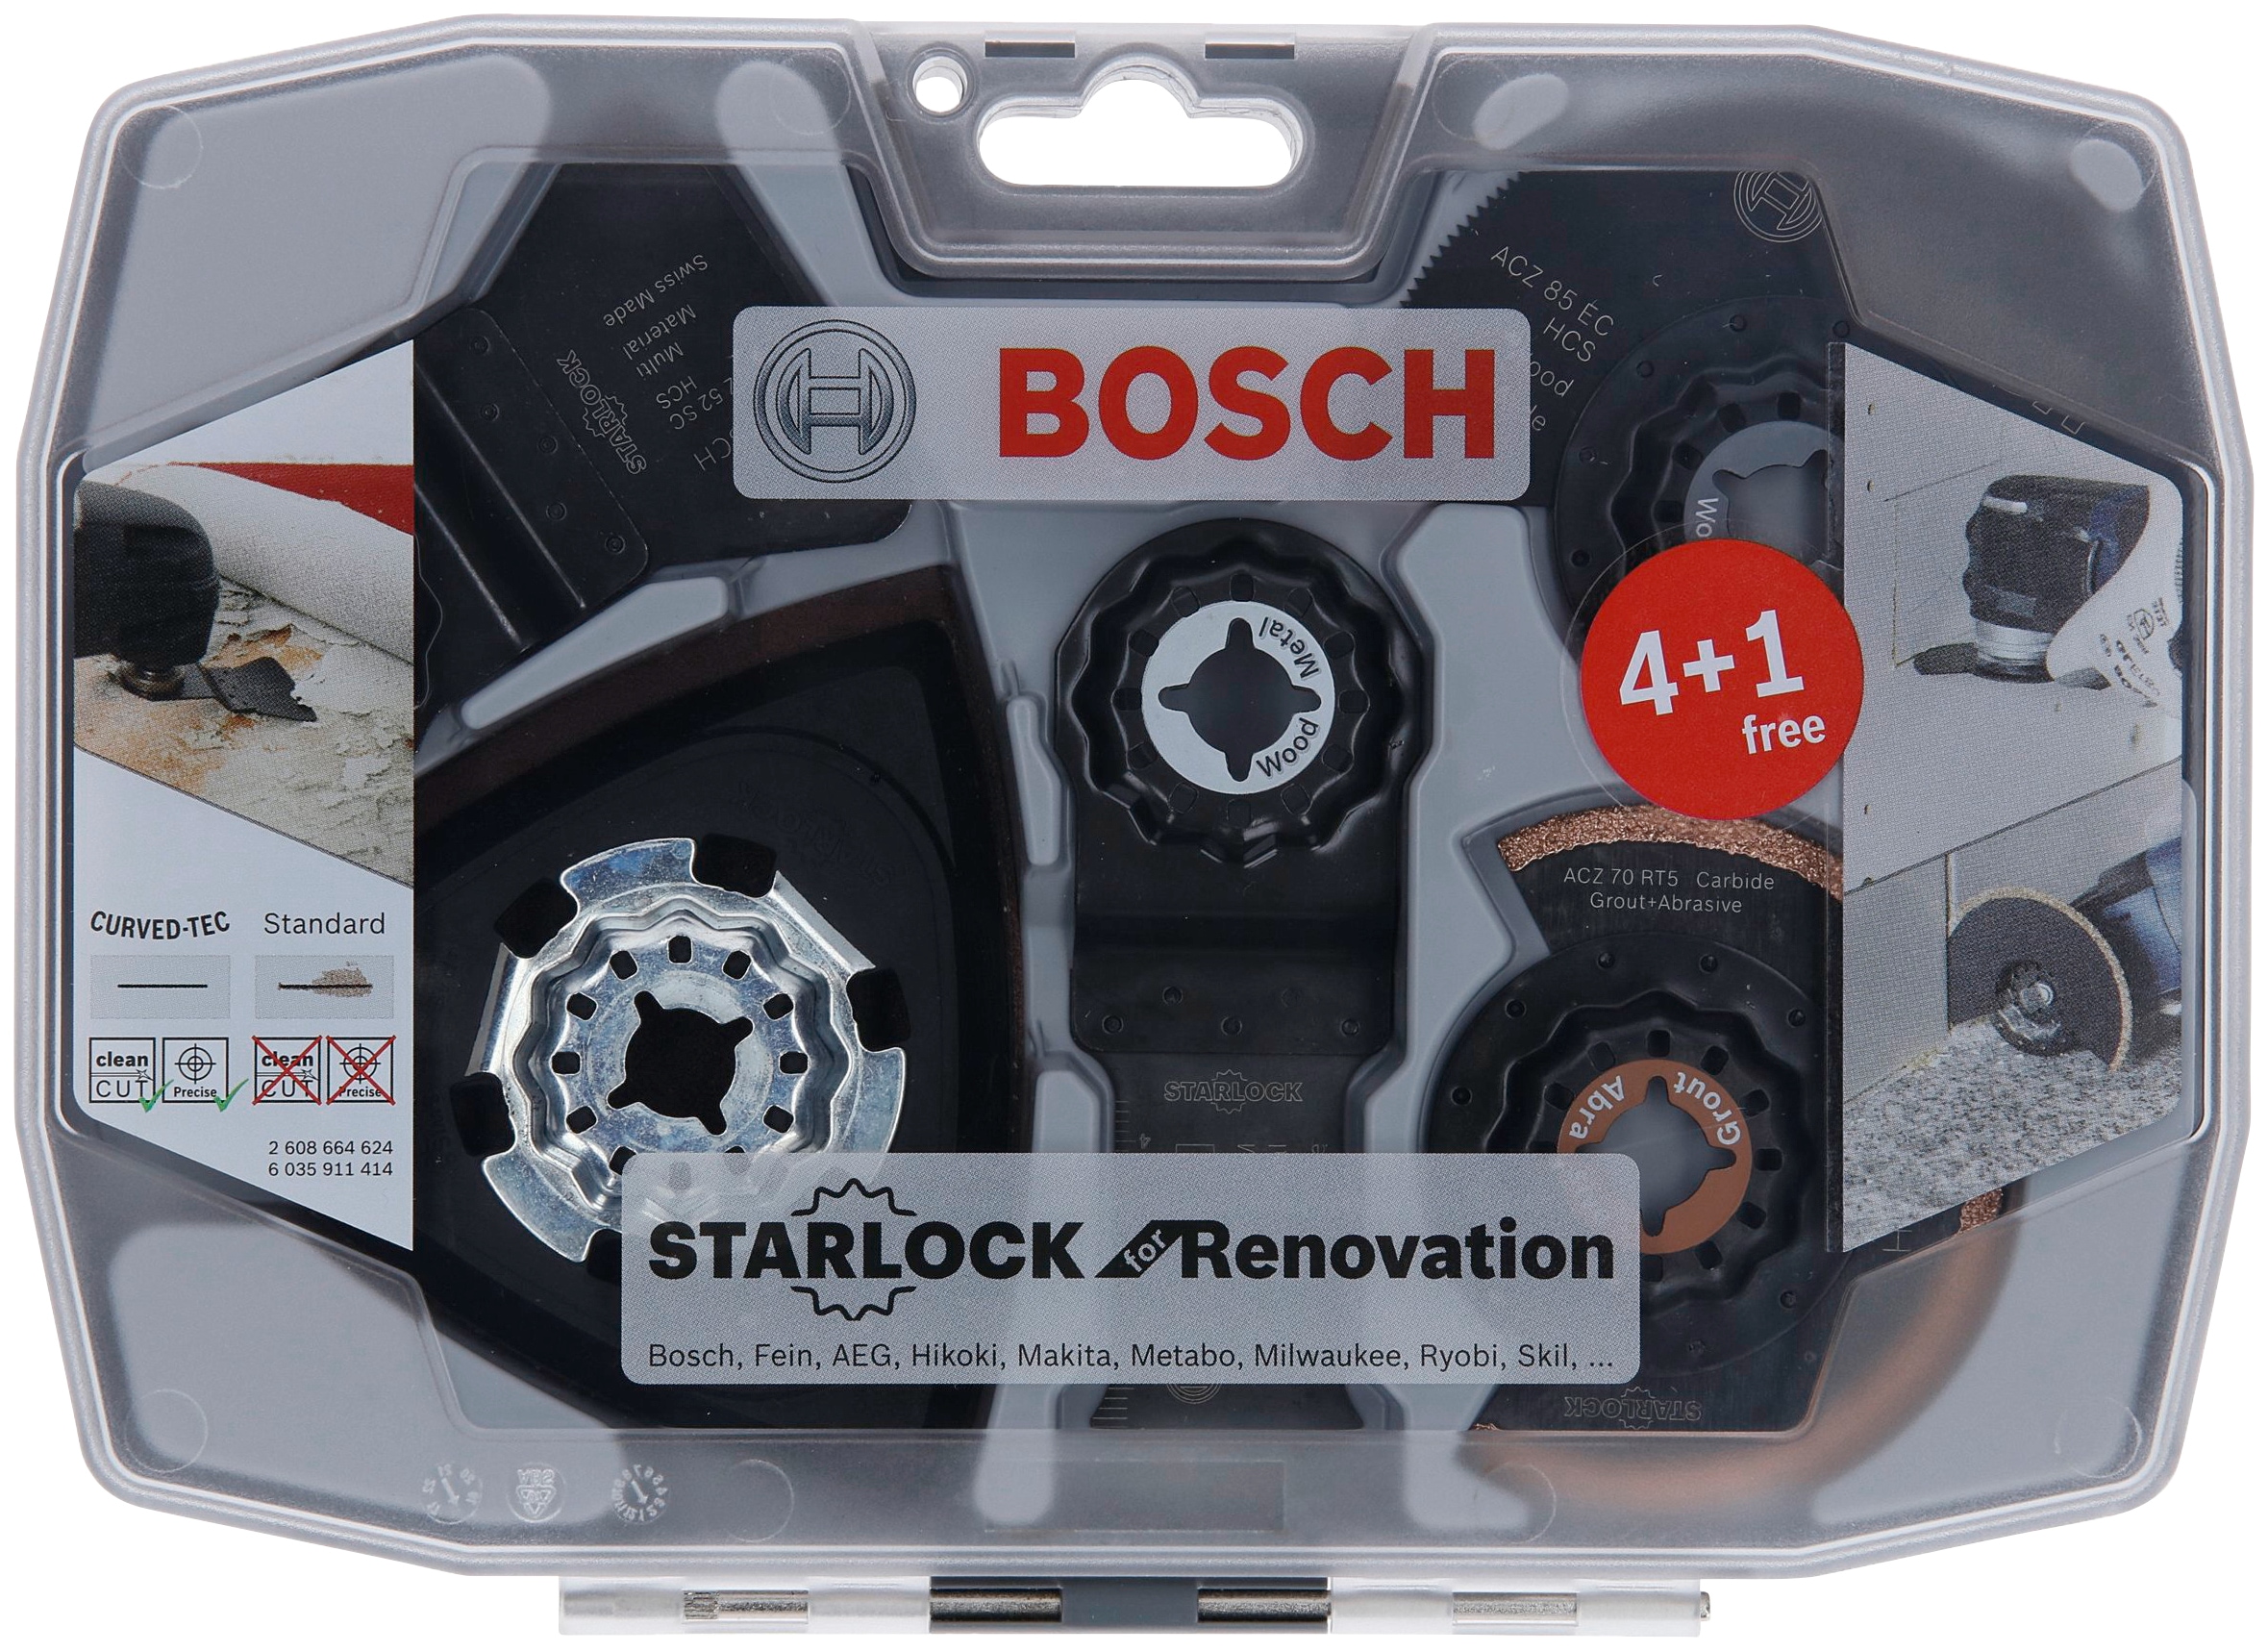 Bosch Professional Werkzeugset »RB-Set Starlock dėl Renov...